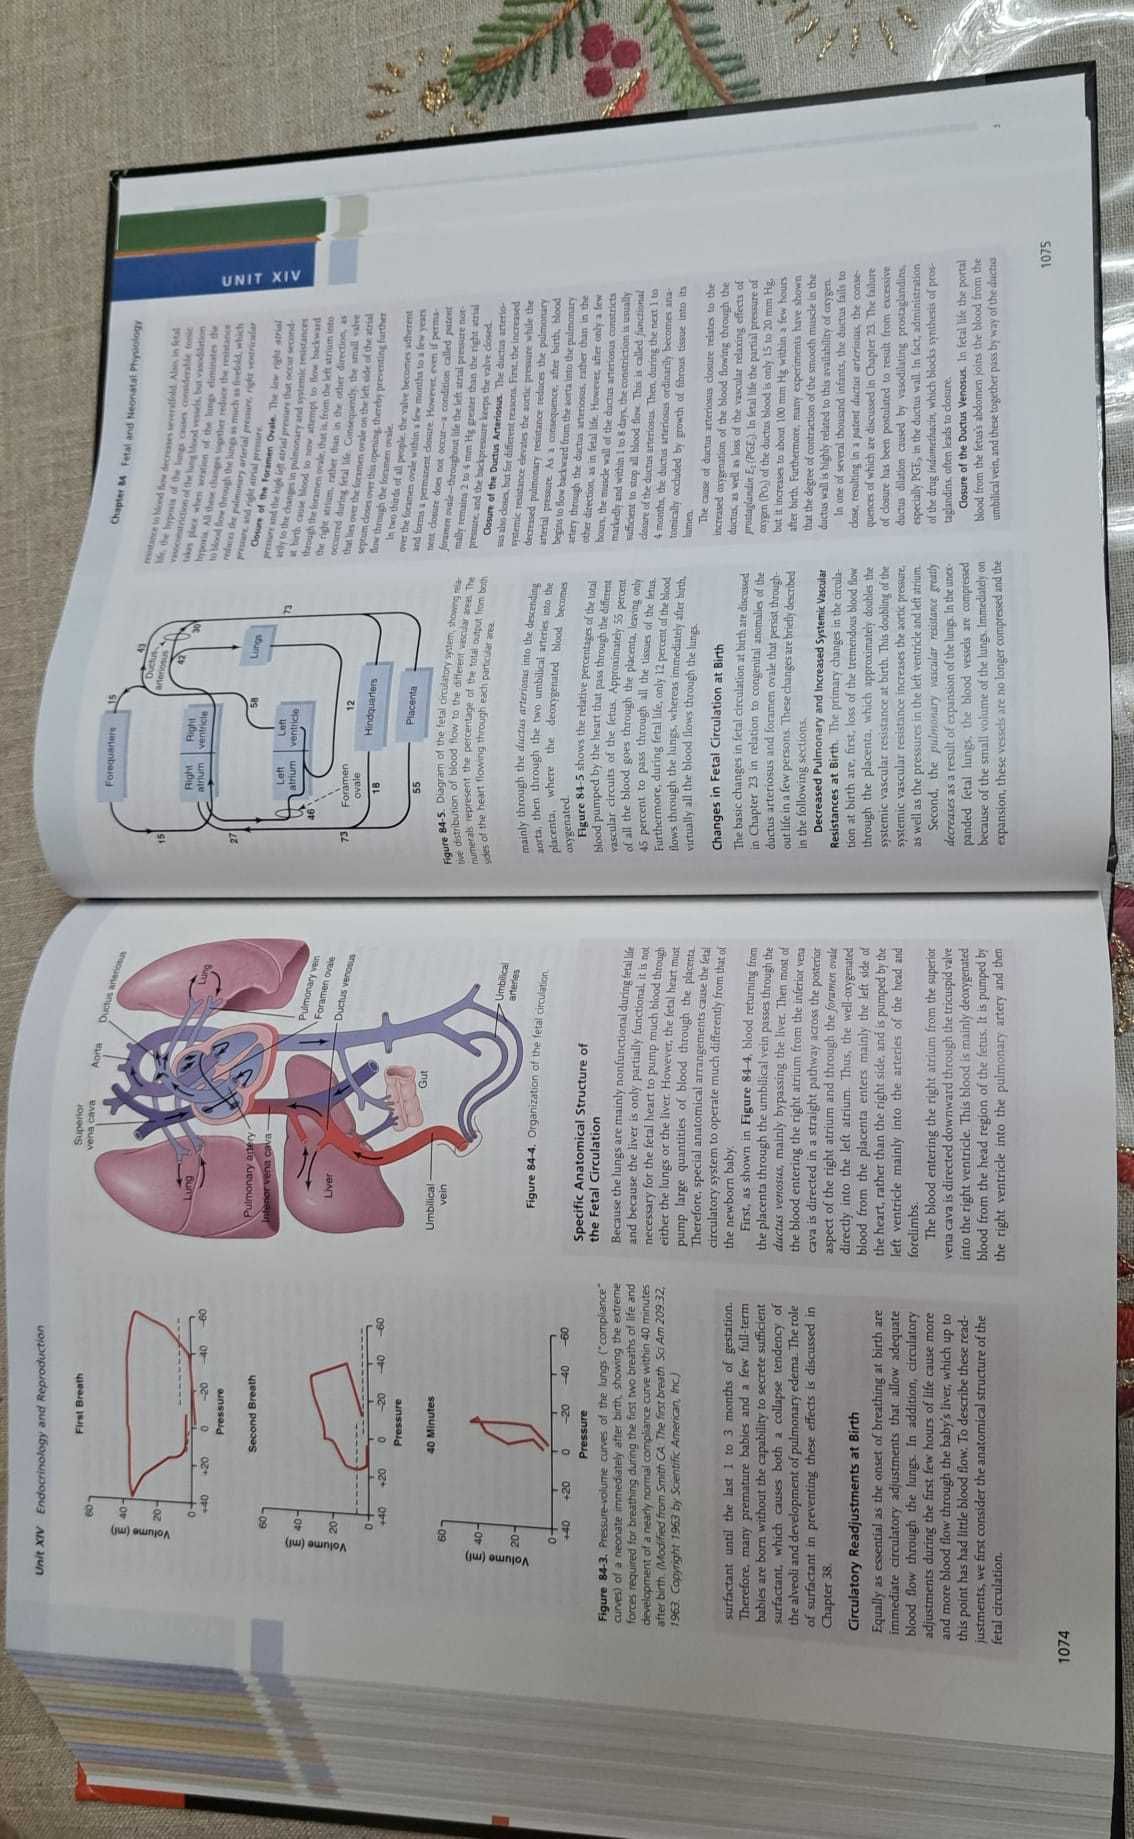 Guyton and Hall - NOVO (Medical Physiology - Textbook)